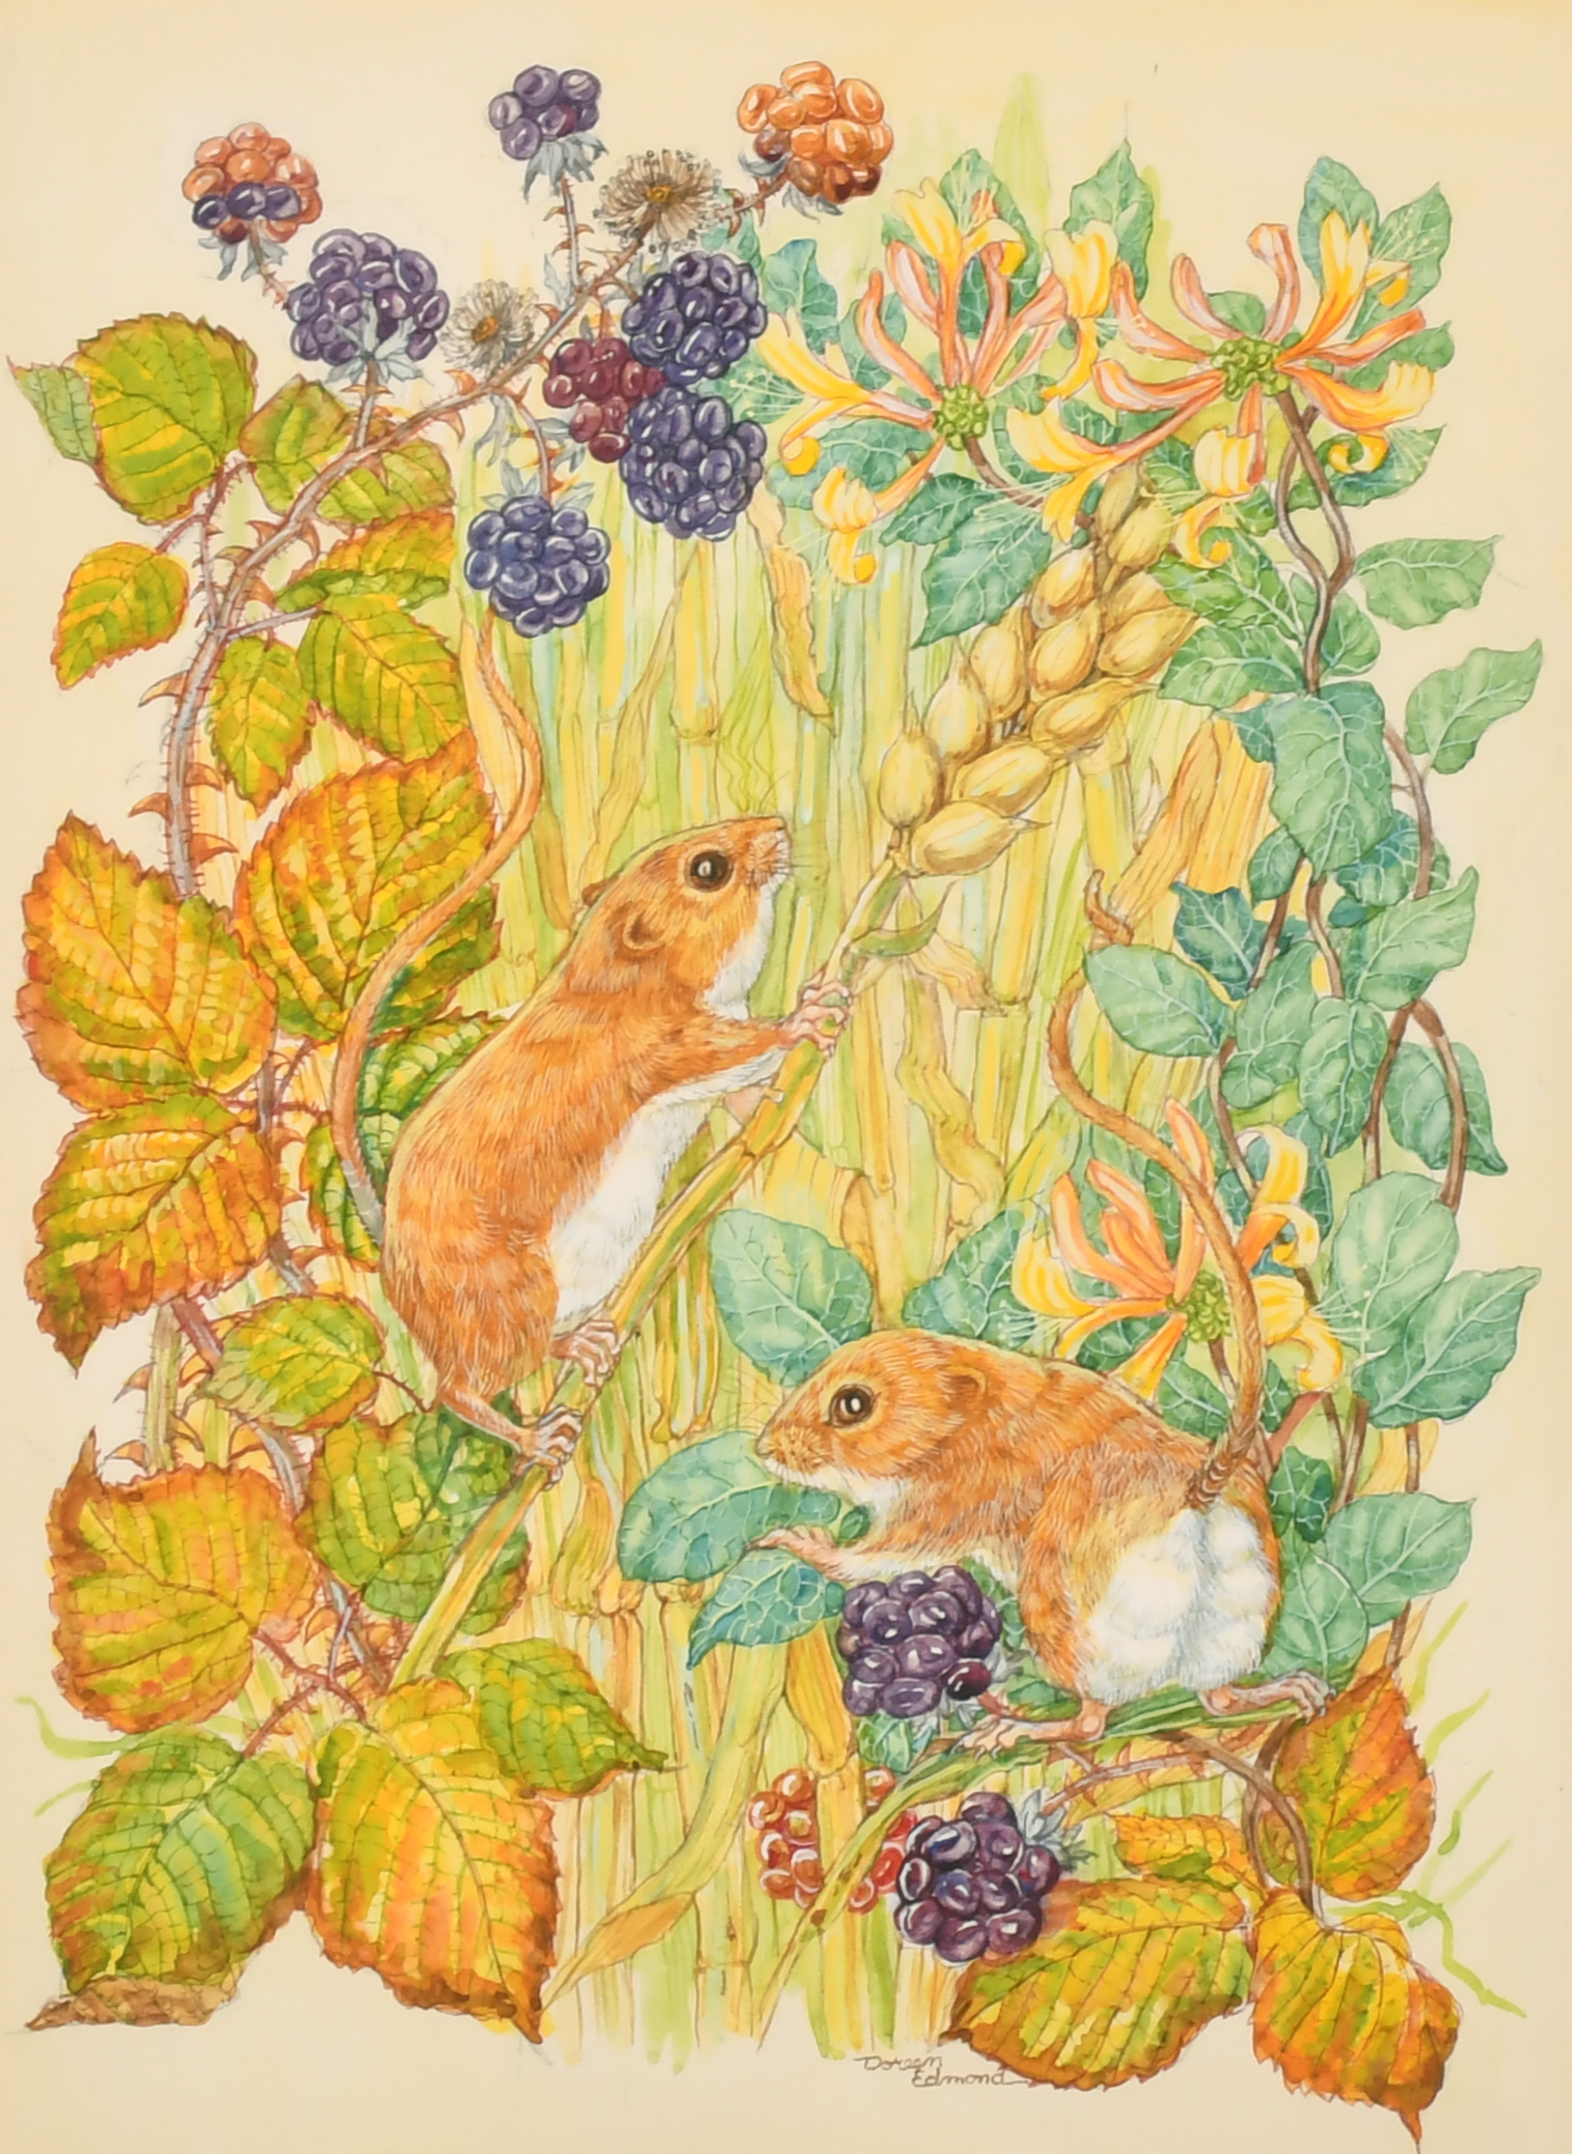 Doreen Edmond (20th Century) British. Mice in the Undergrowth, Watercolour, Signed, 12.75" x 9.